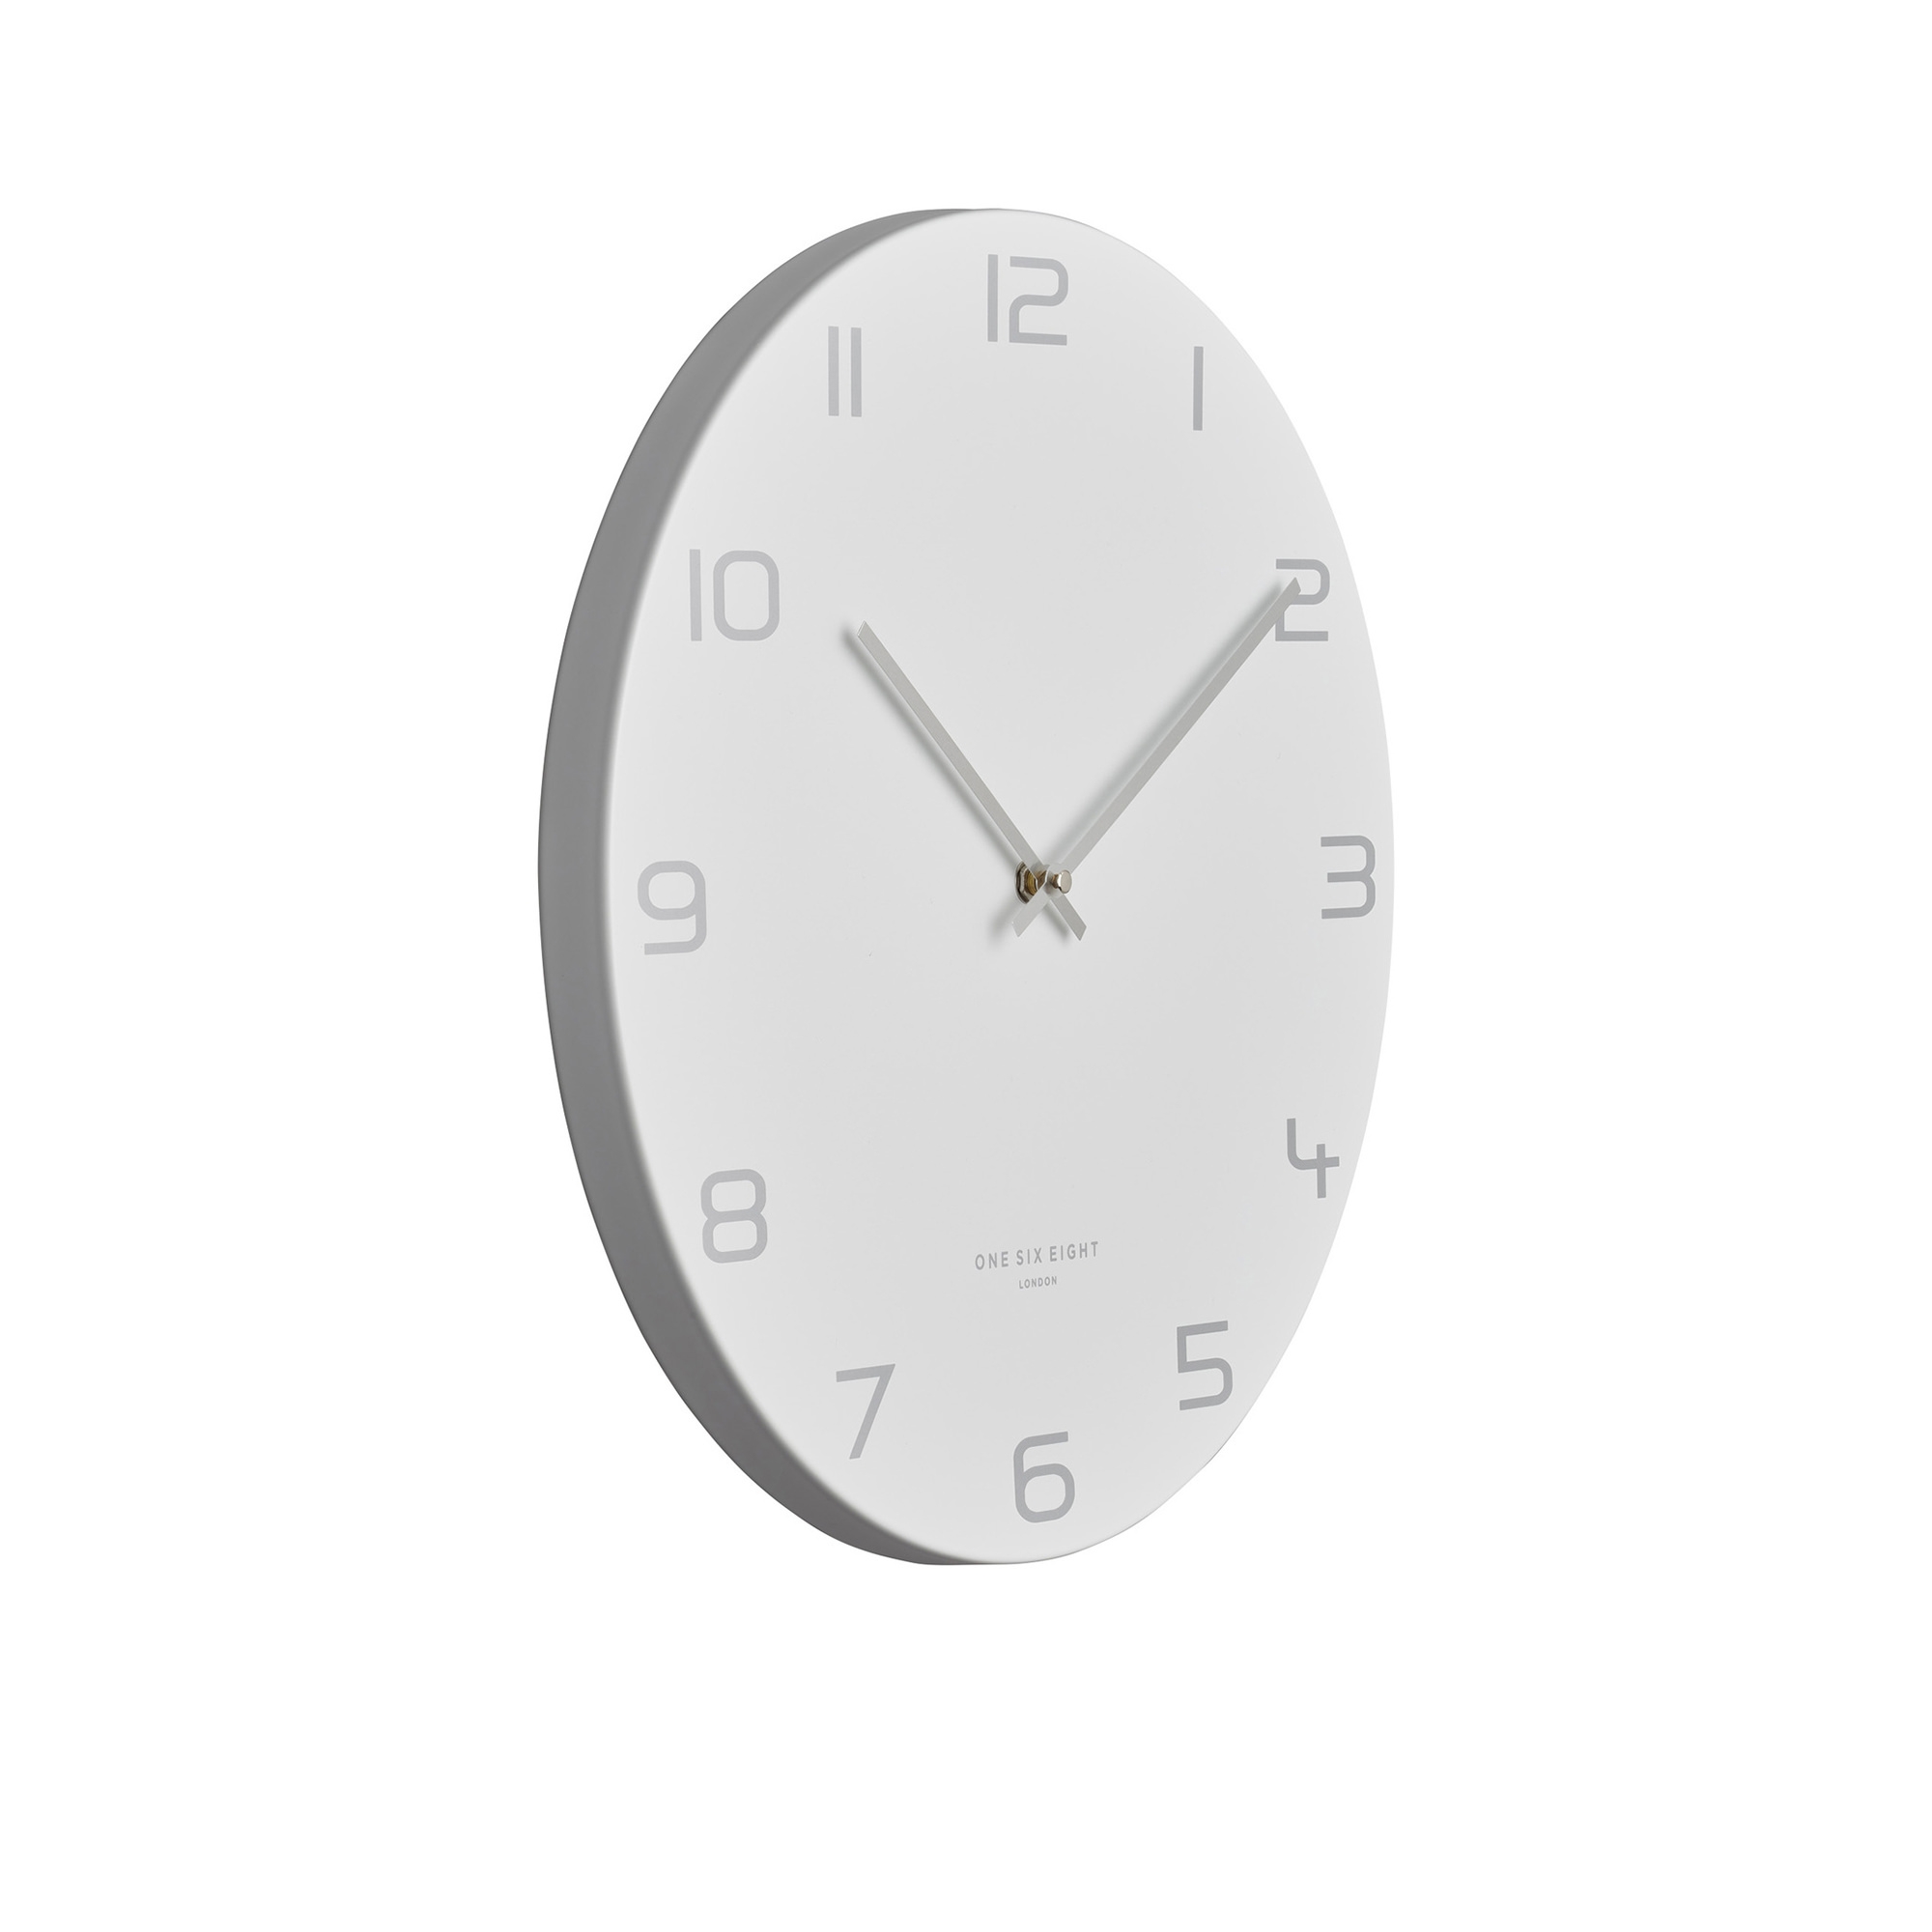 One Six Eight London Bianca Silent Wall Clock 40cm White Image 2